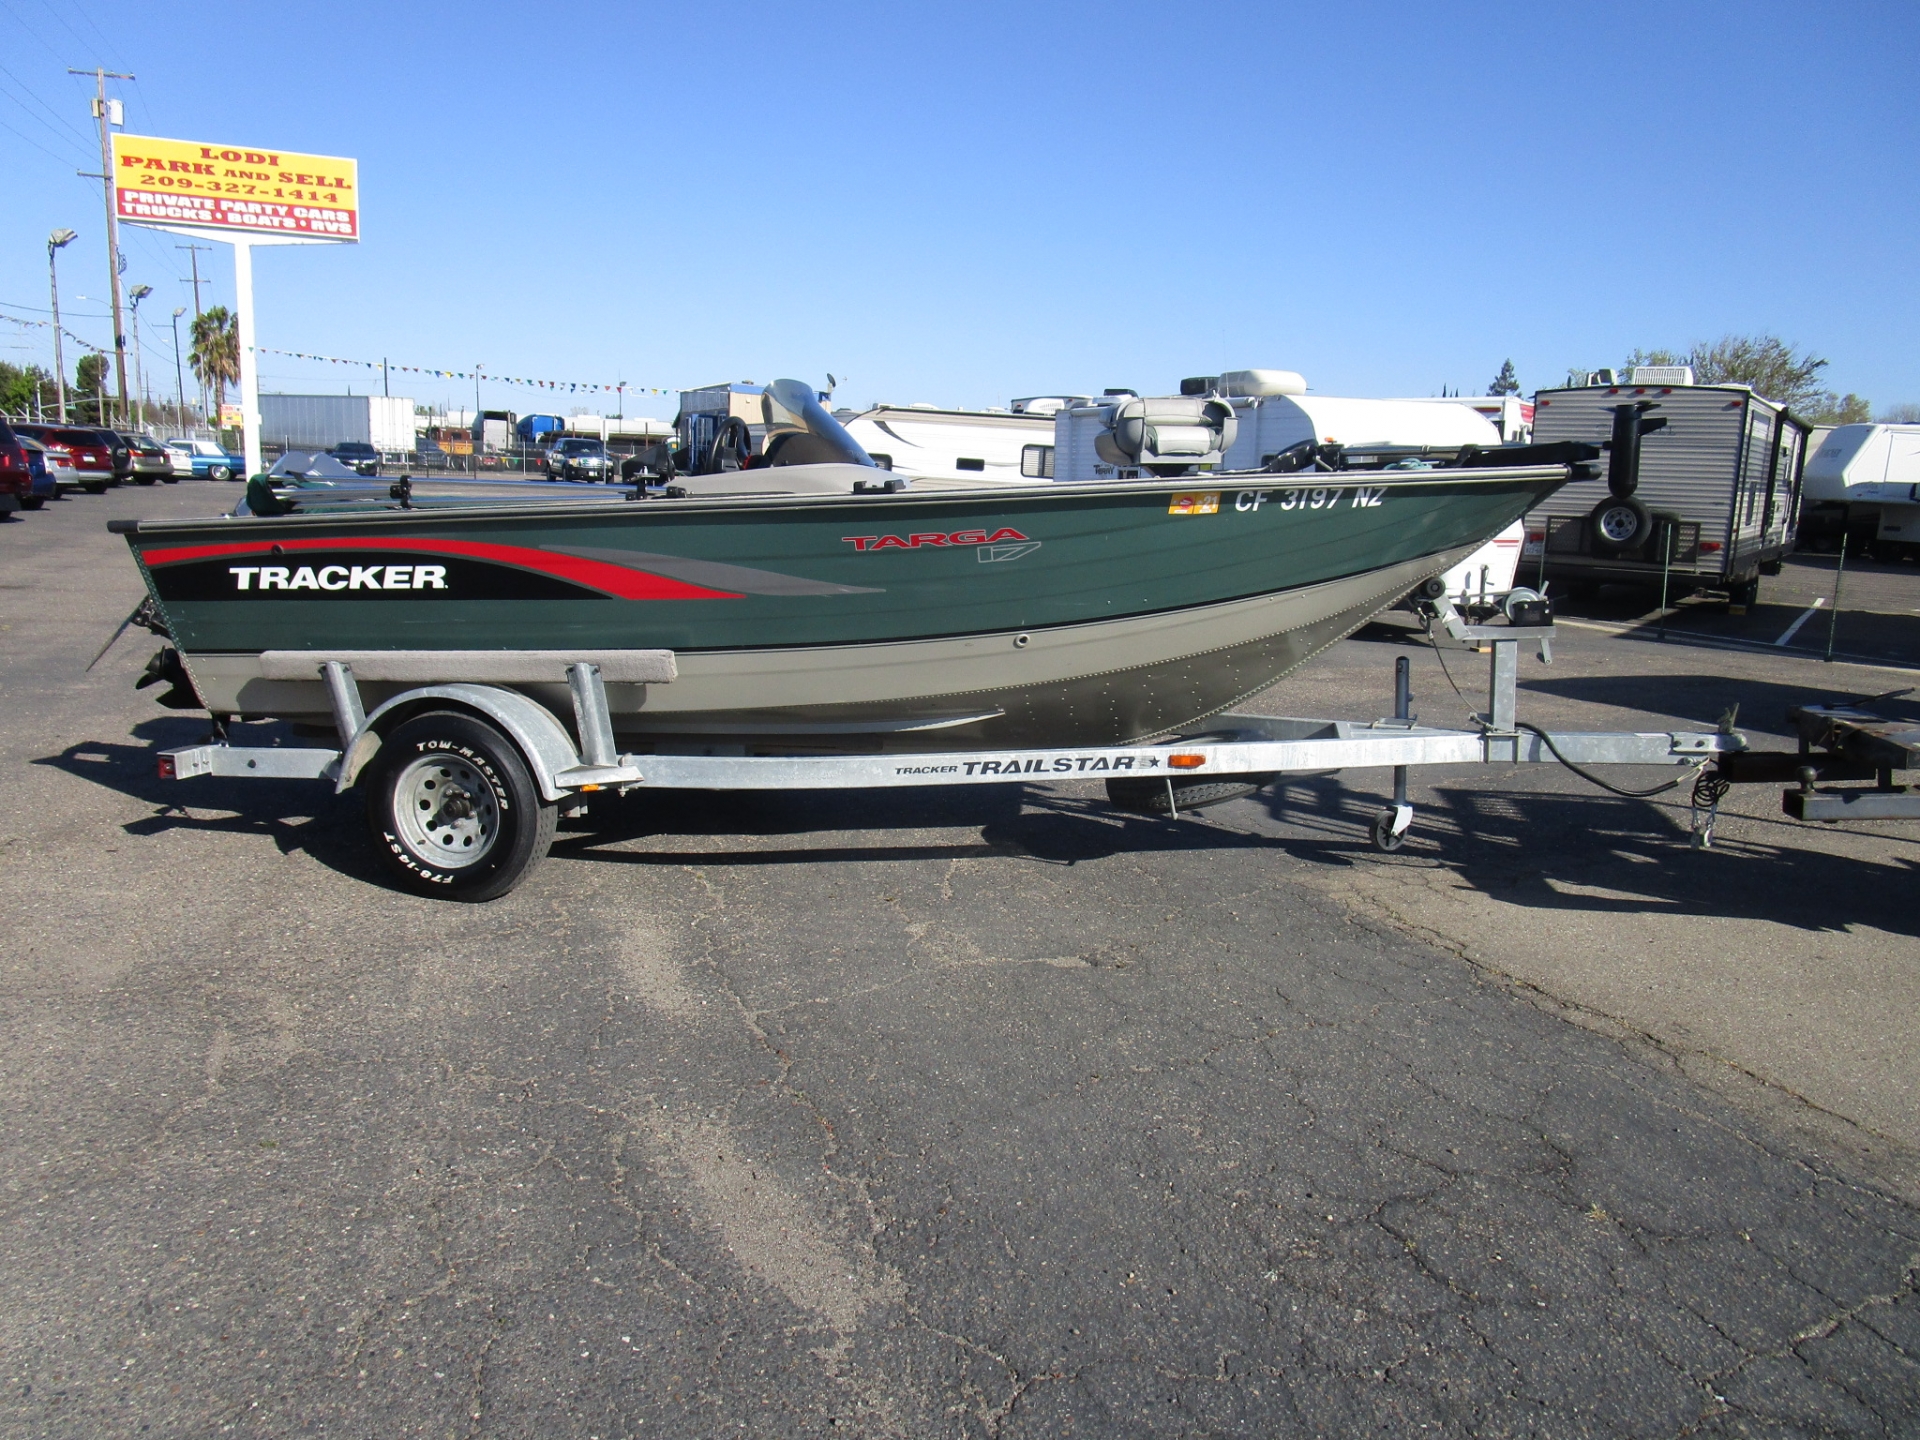 Boat for sale: 1997 Tracker Aluminum Fishing Boat Targa 17' in Lodi  Stockton CA - Lodi Park and Sell